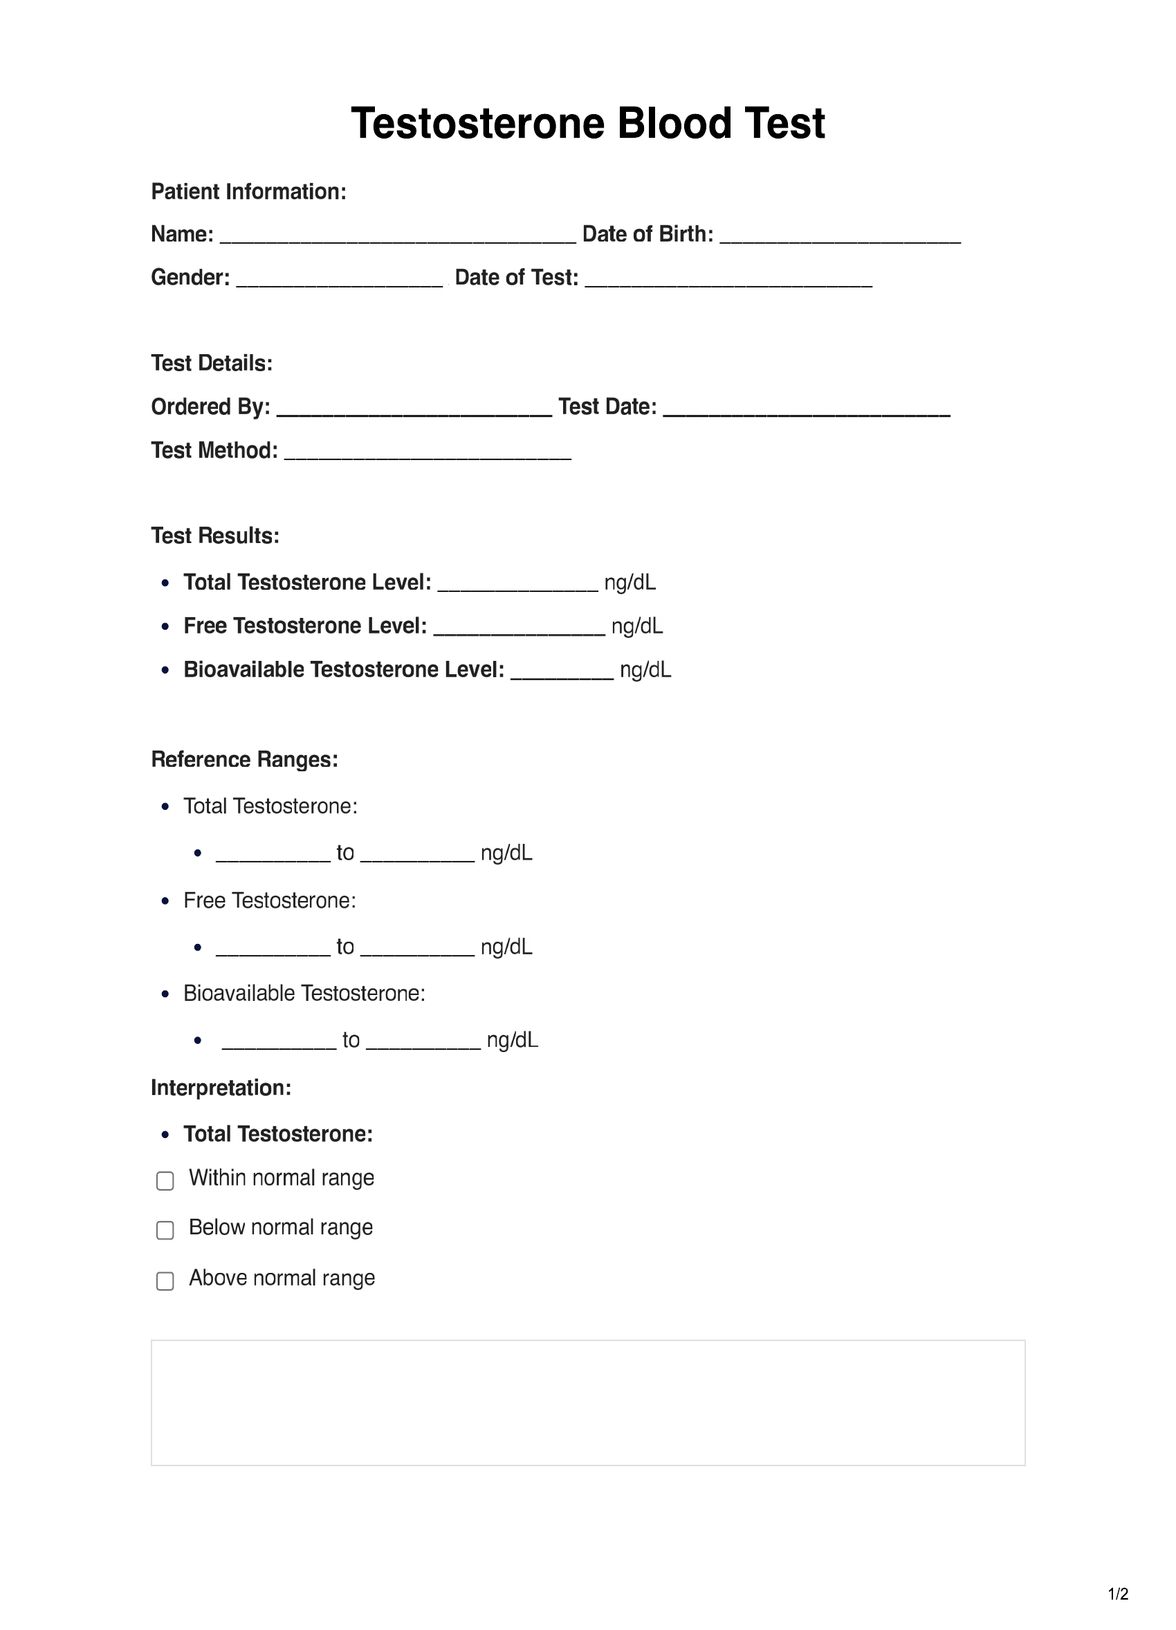 Testosterone Blood Test PDF Example